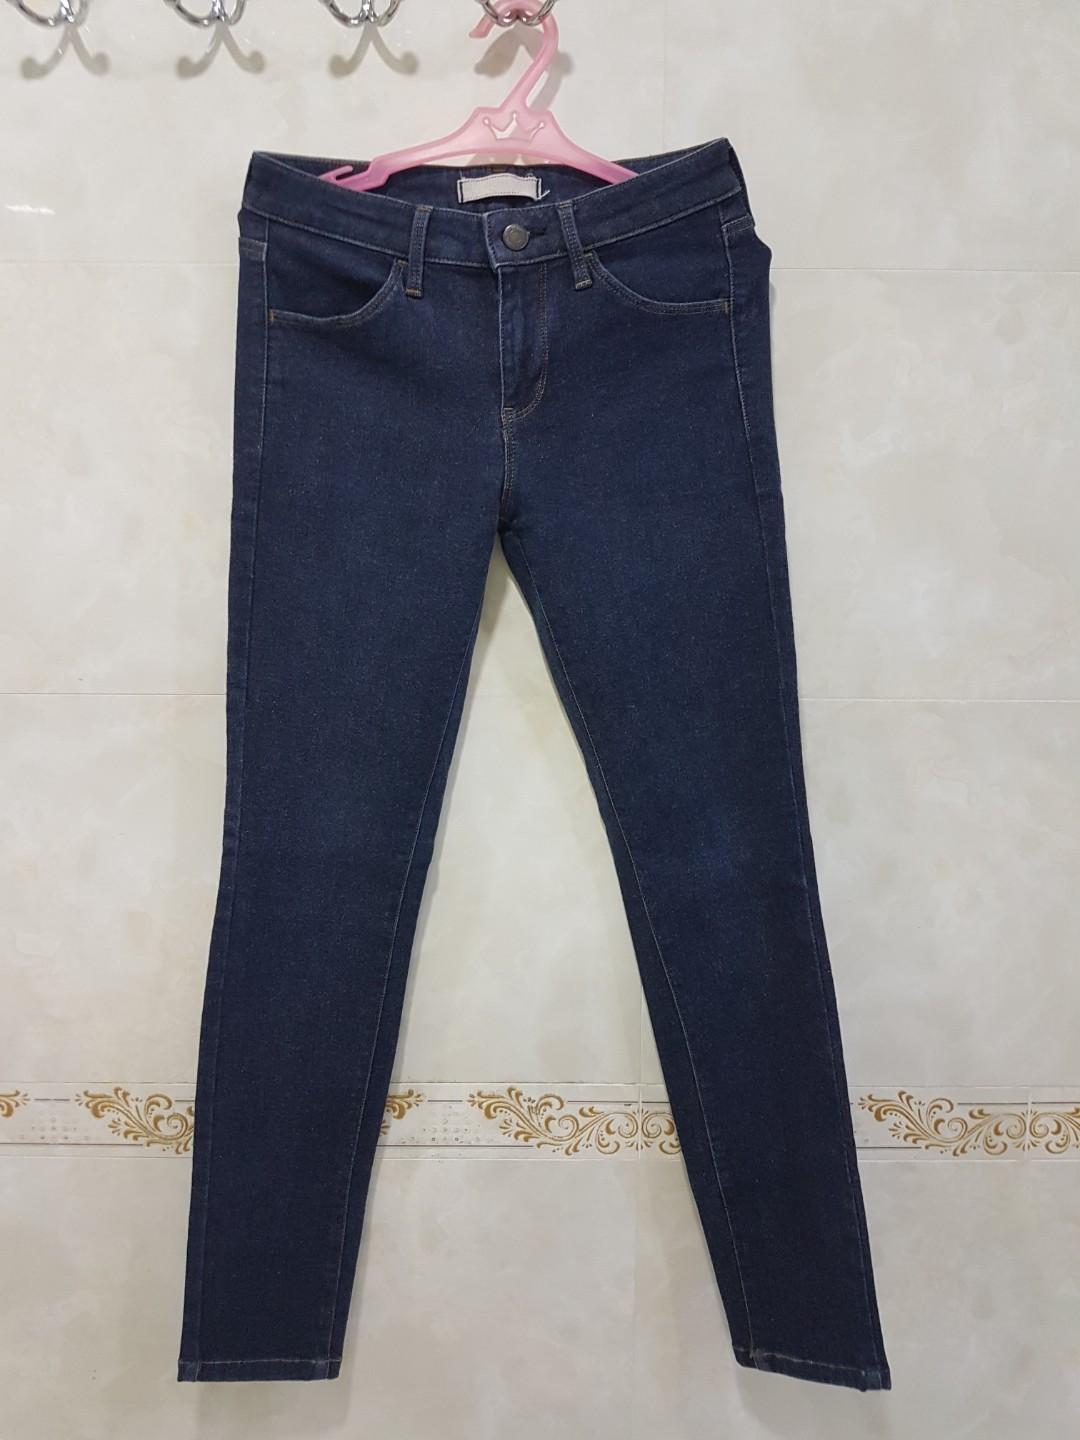 size 23 jeans